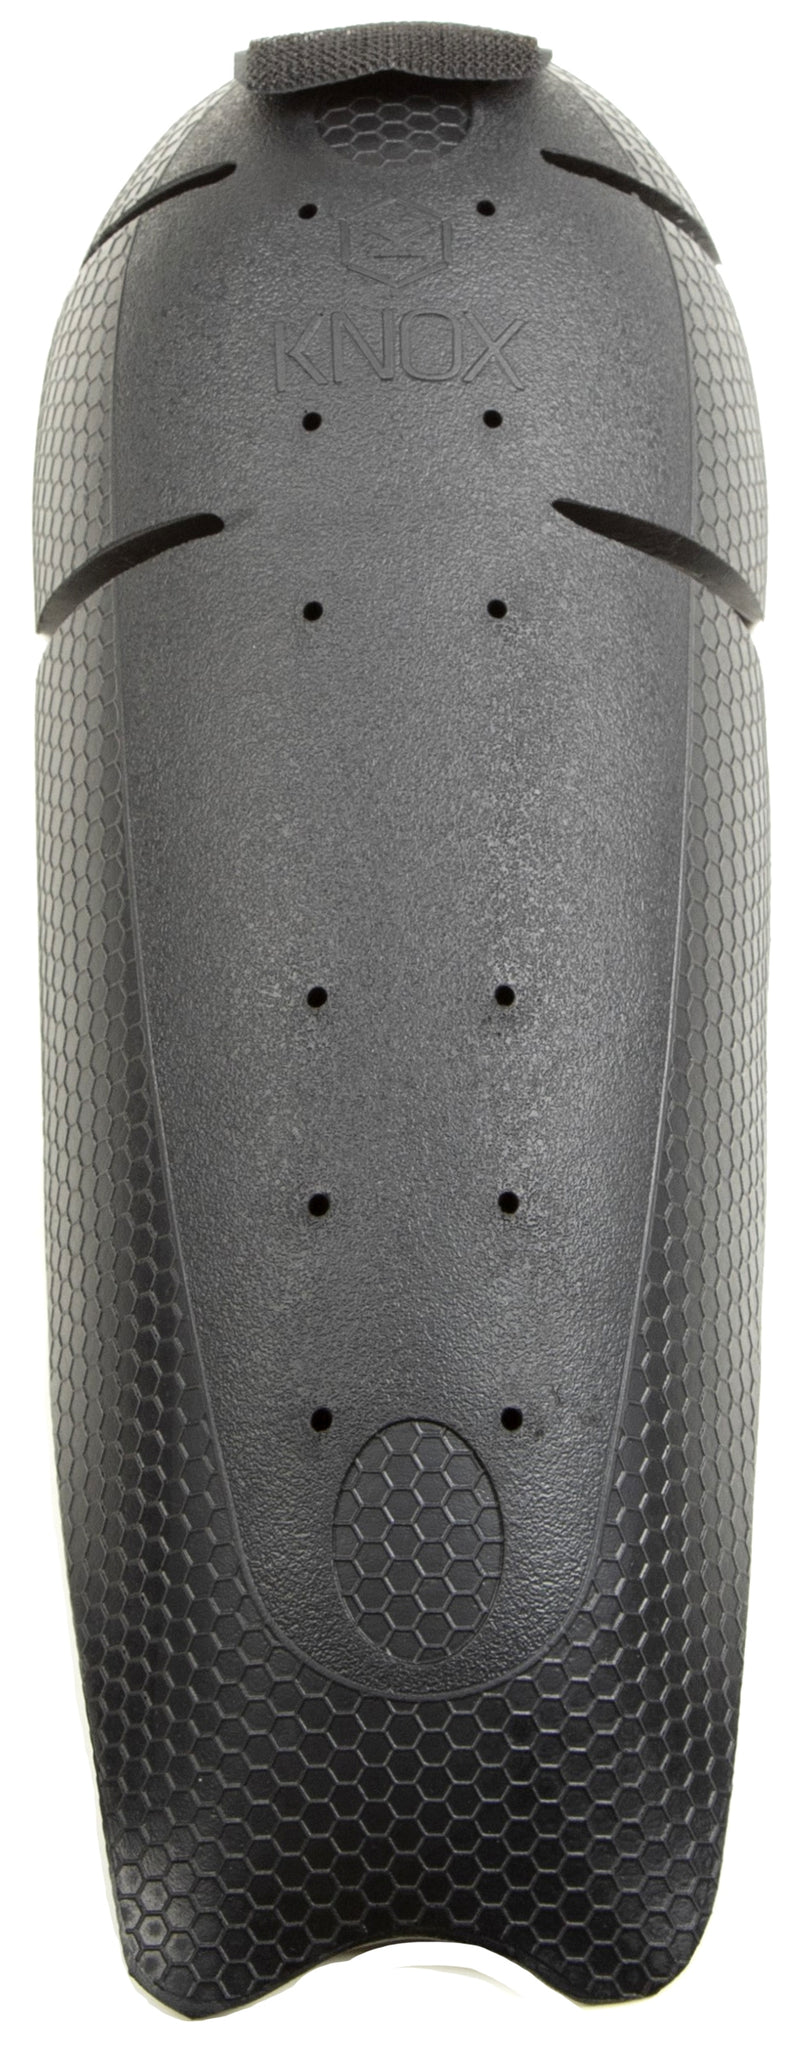 Cortech 8968-0310-49 Knee Armor  Protector with Hook/Loop Fastener